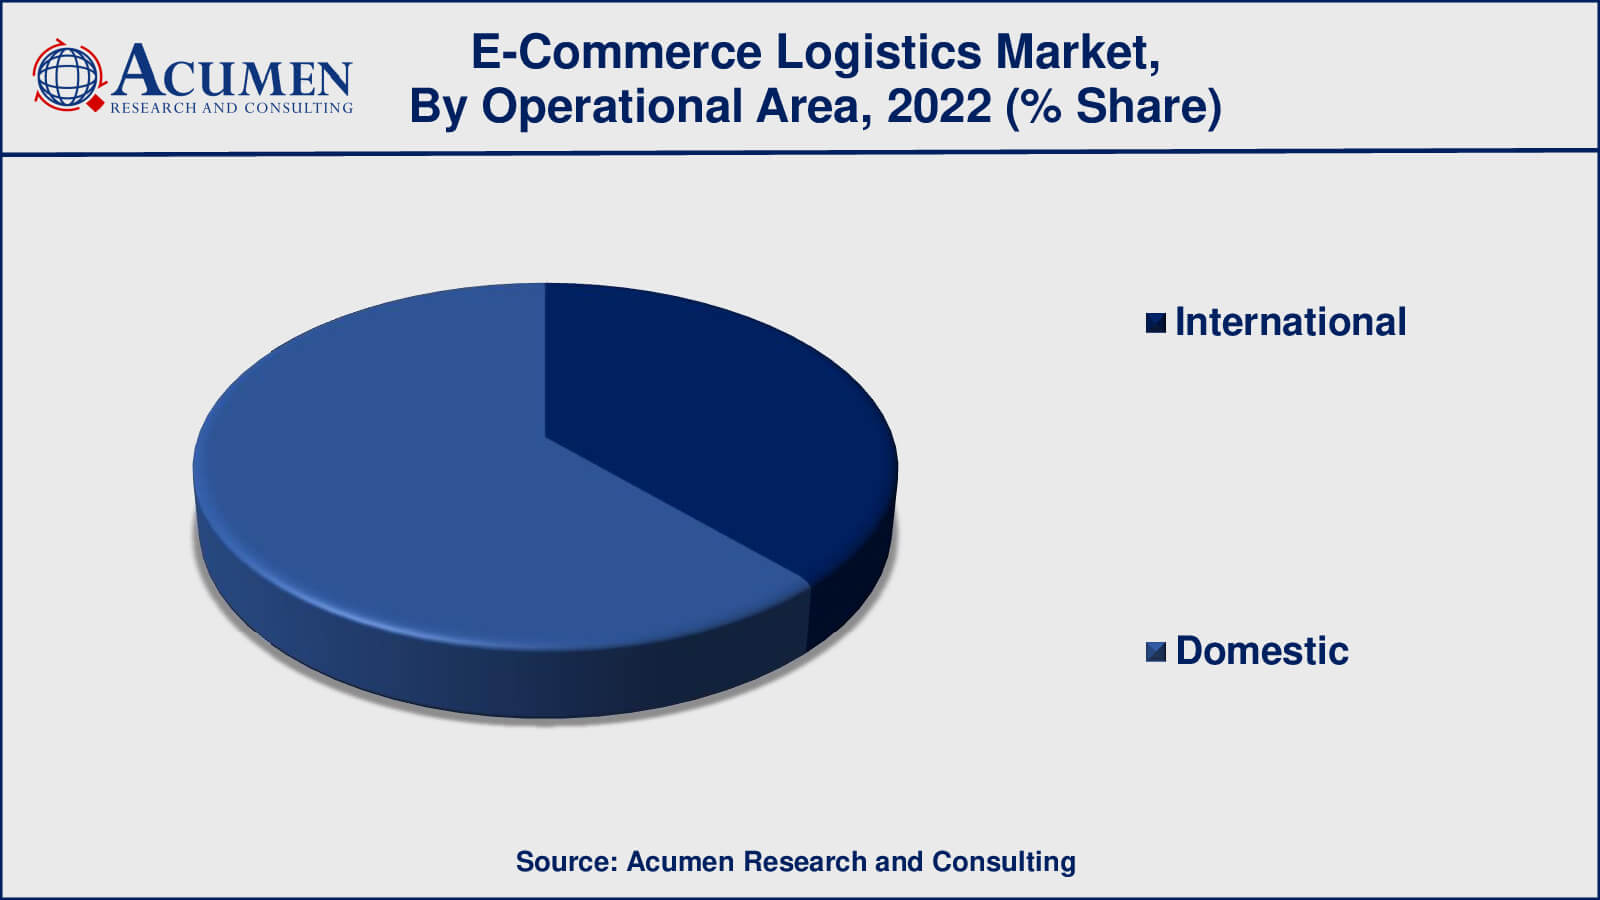 E-Commerce Logistics Market Drivers